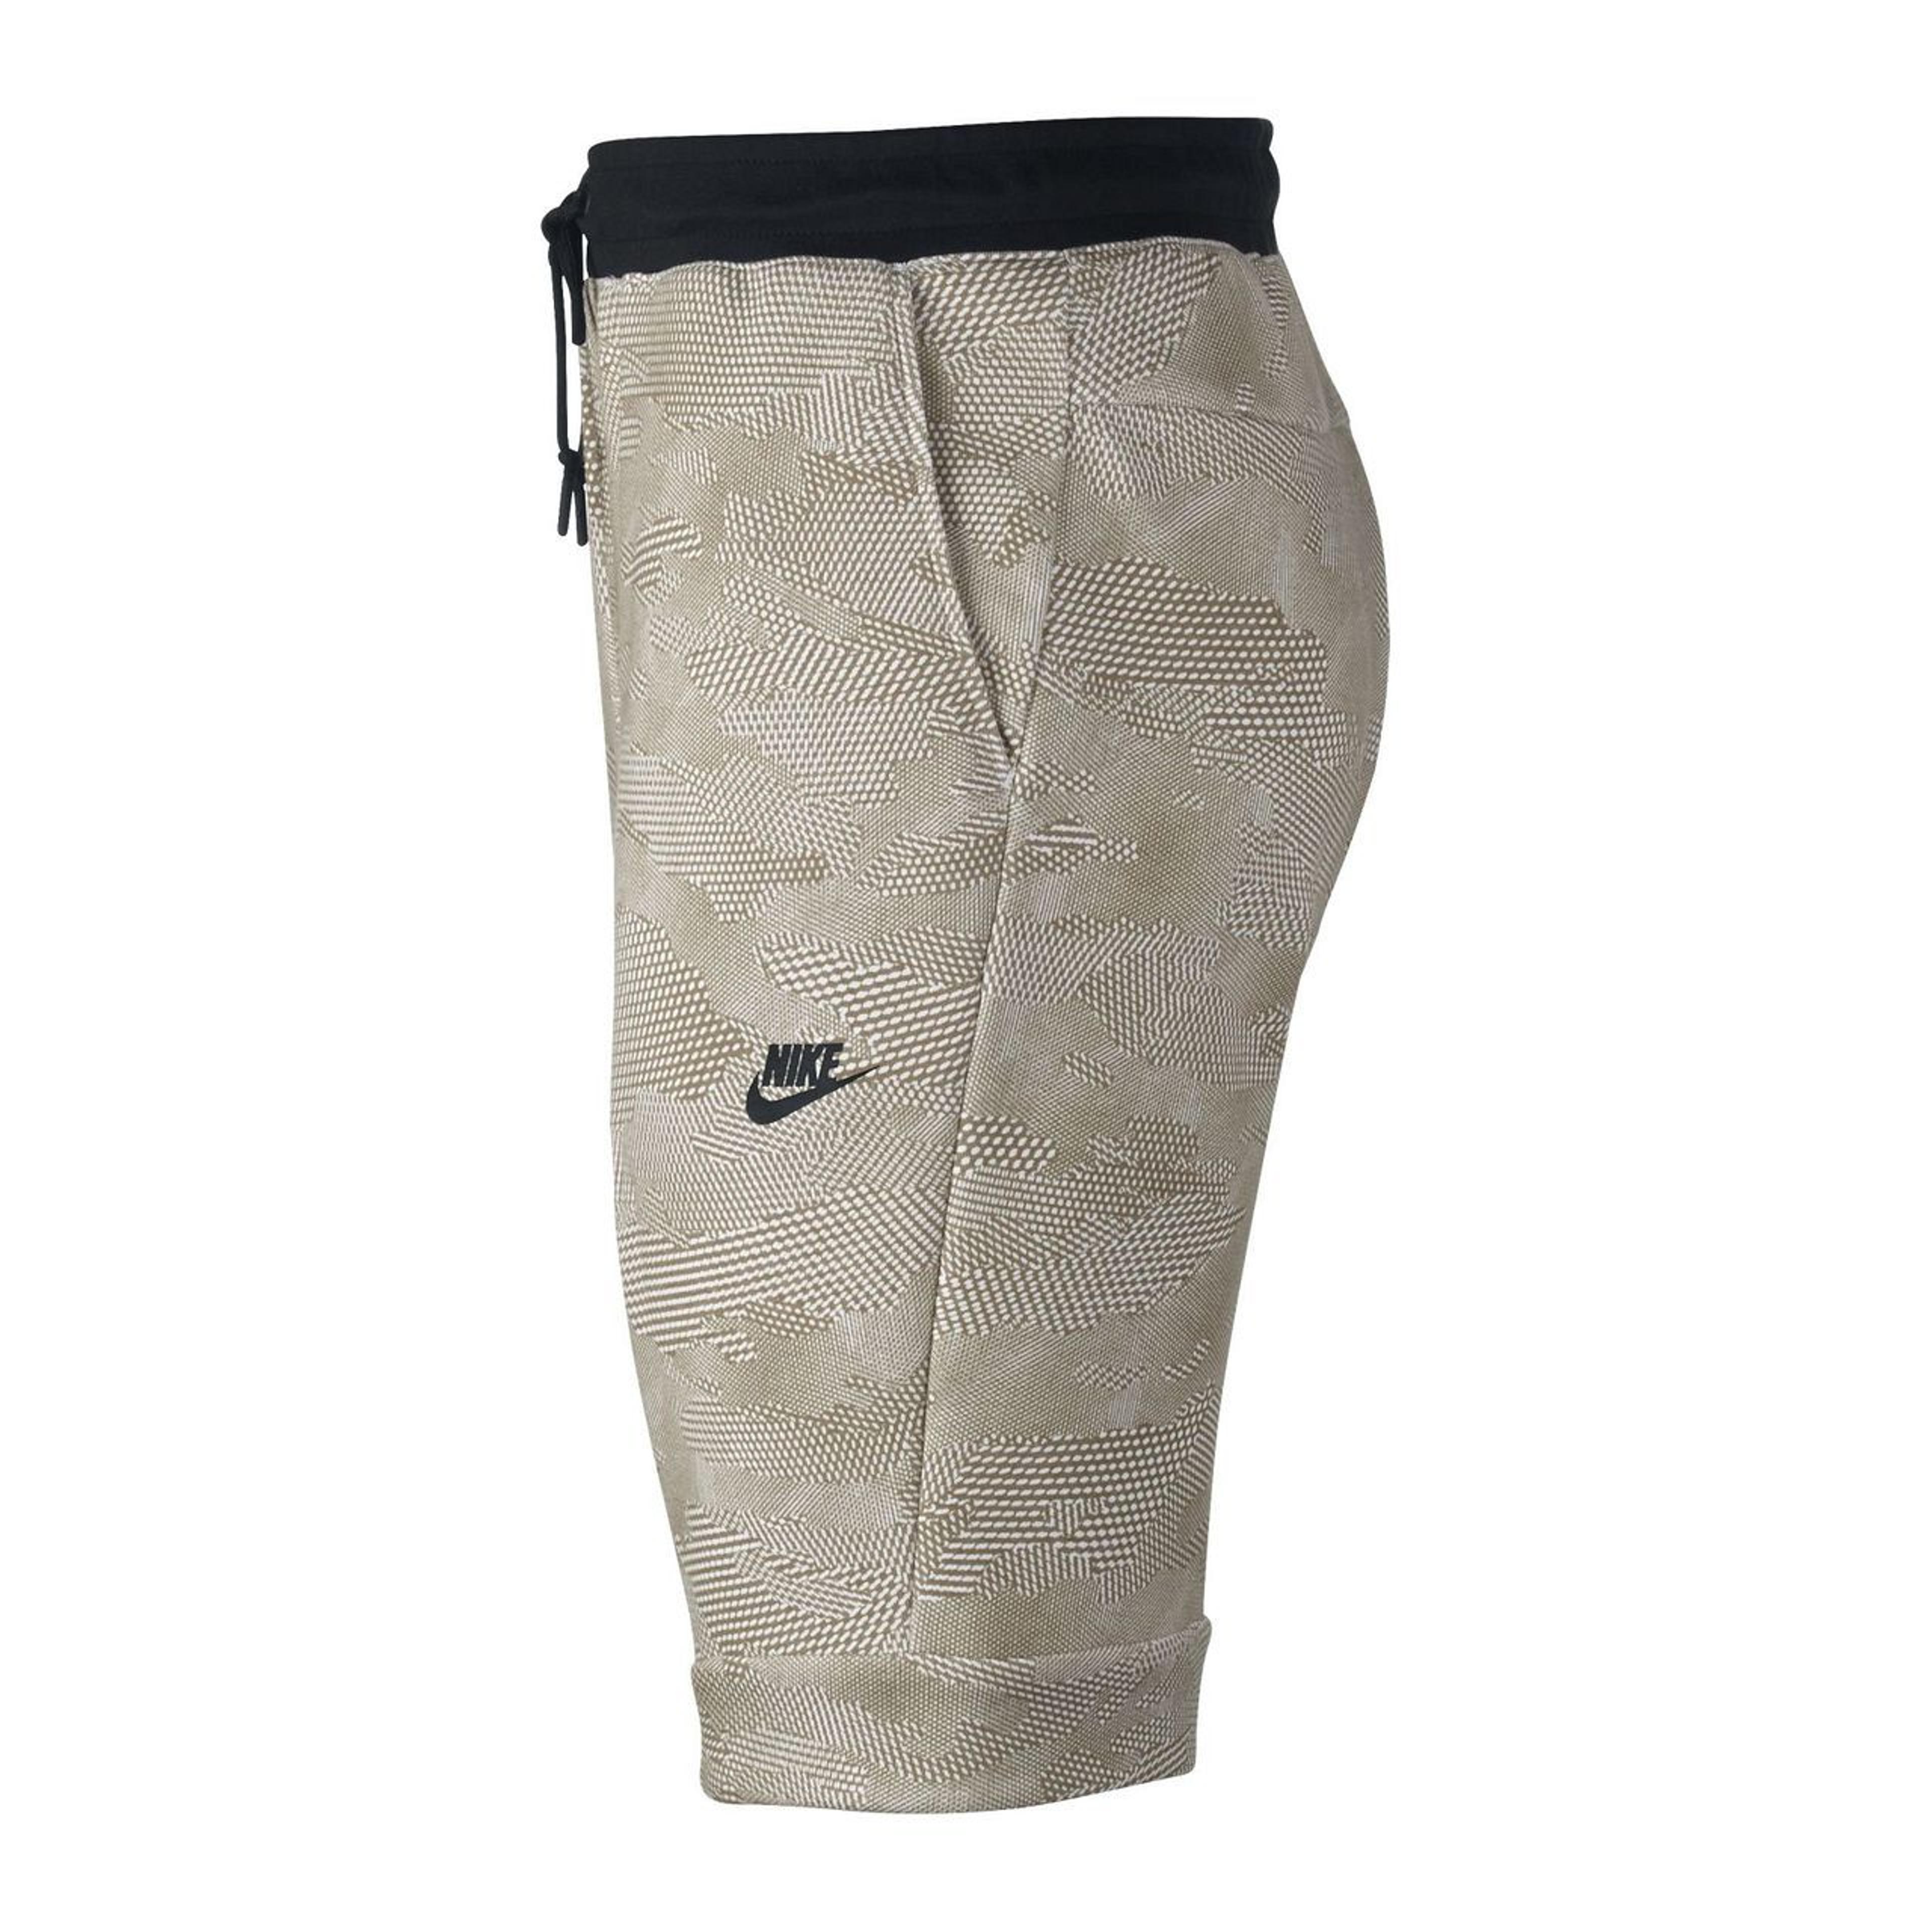 Alternate View 1 of Men's Nike Shorts Tech Fleece Printed Beige Khaki 832124 235